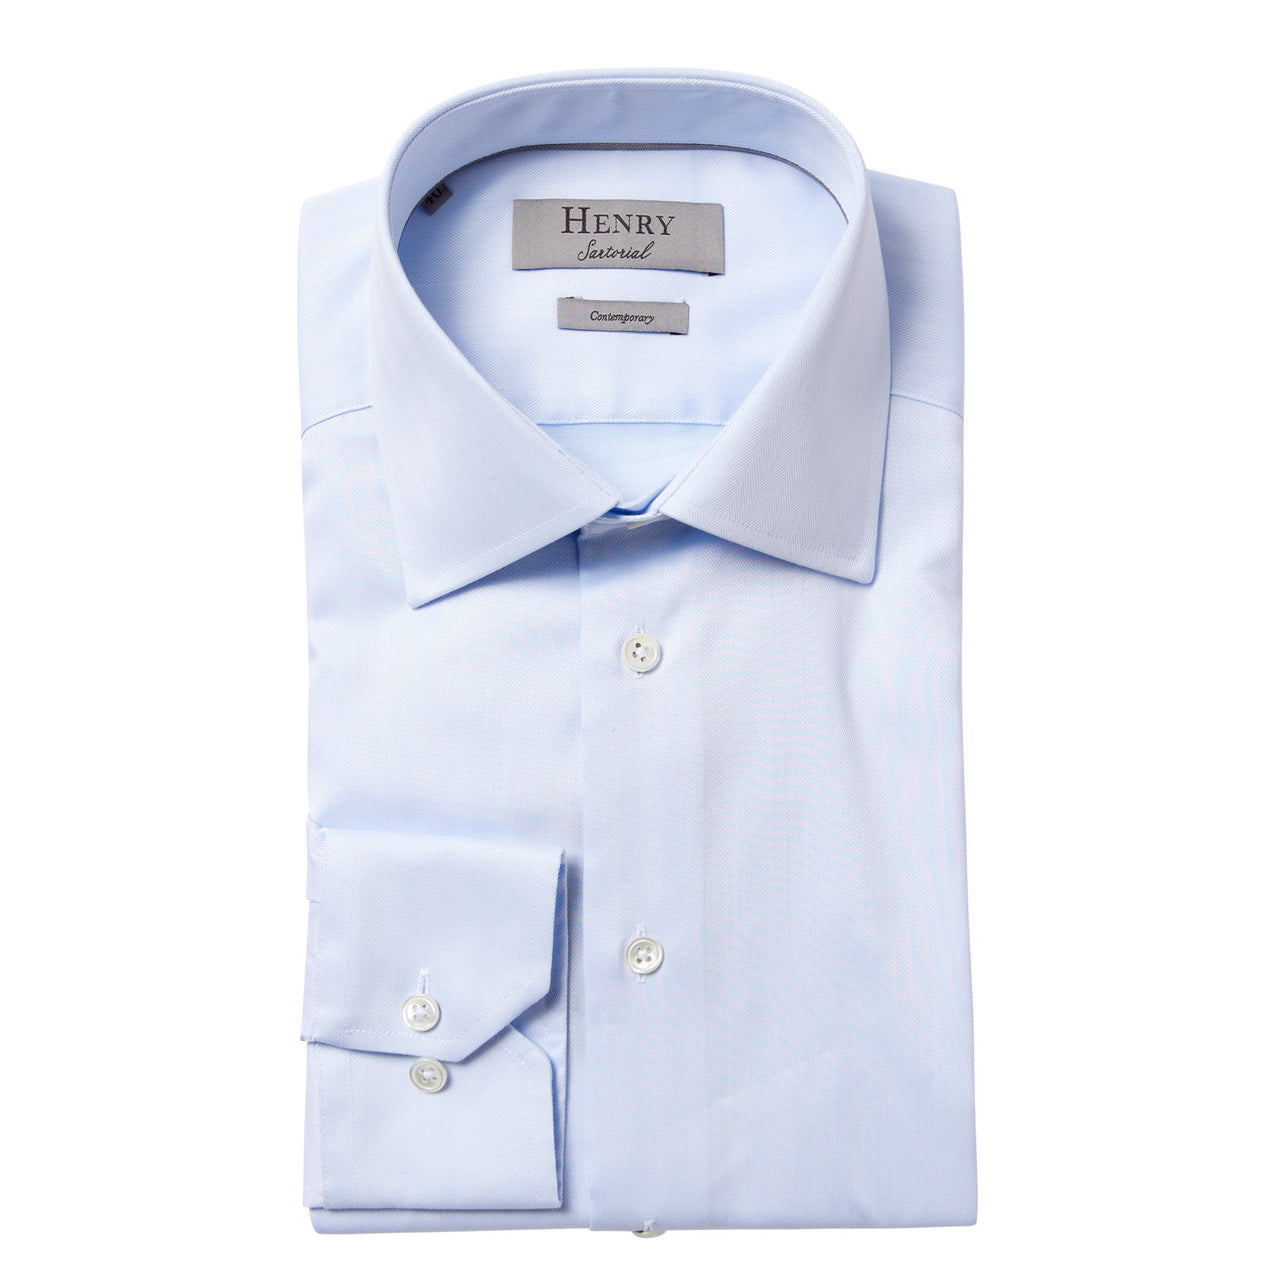 HENRY SARTORIAL Herringbone Business Shirt Single Cuff Contemporary Fit LIGHT BLUE